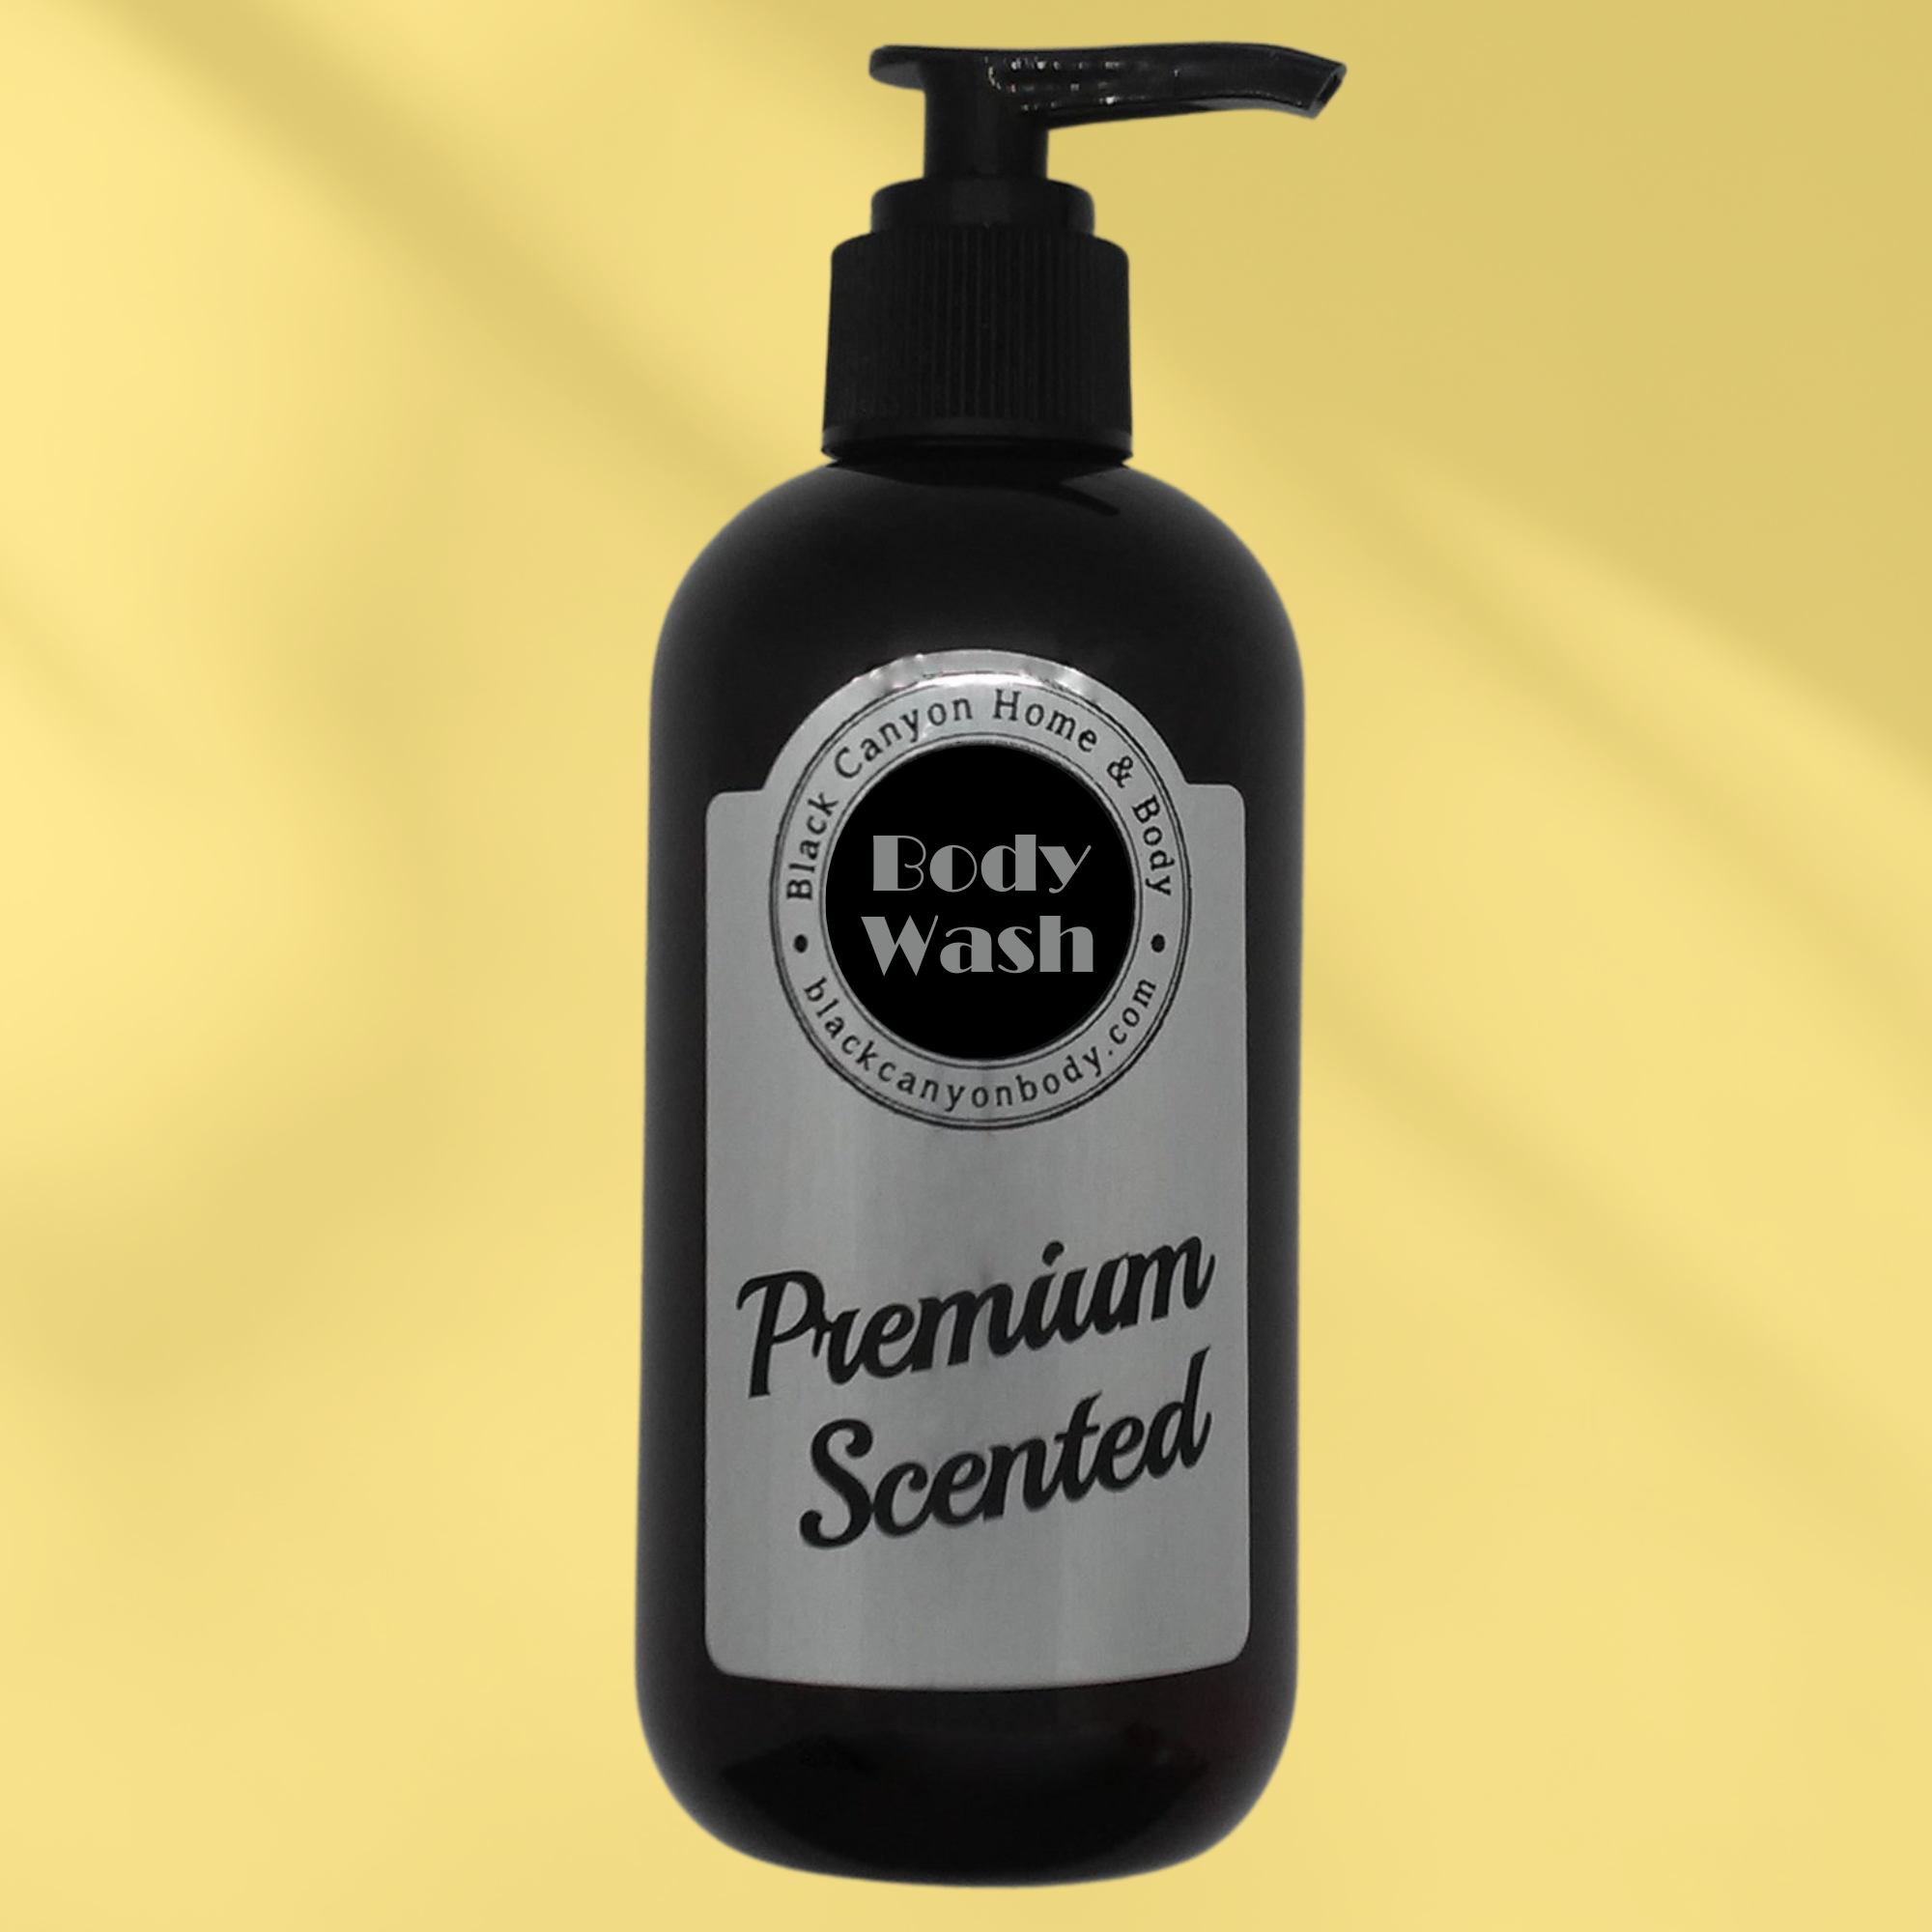 Black Canyon Bartlett Pear & Brandy Scented Luxury Body Wash